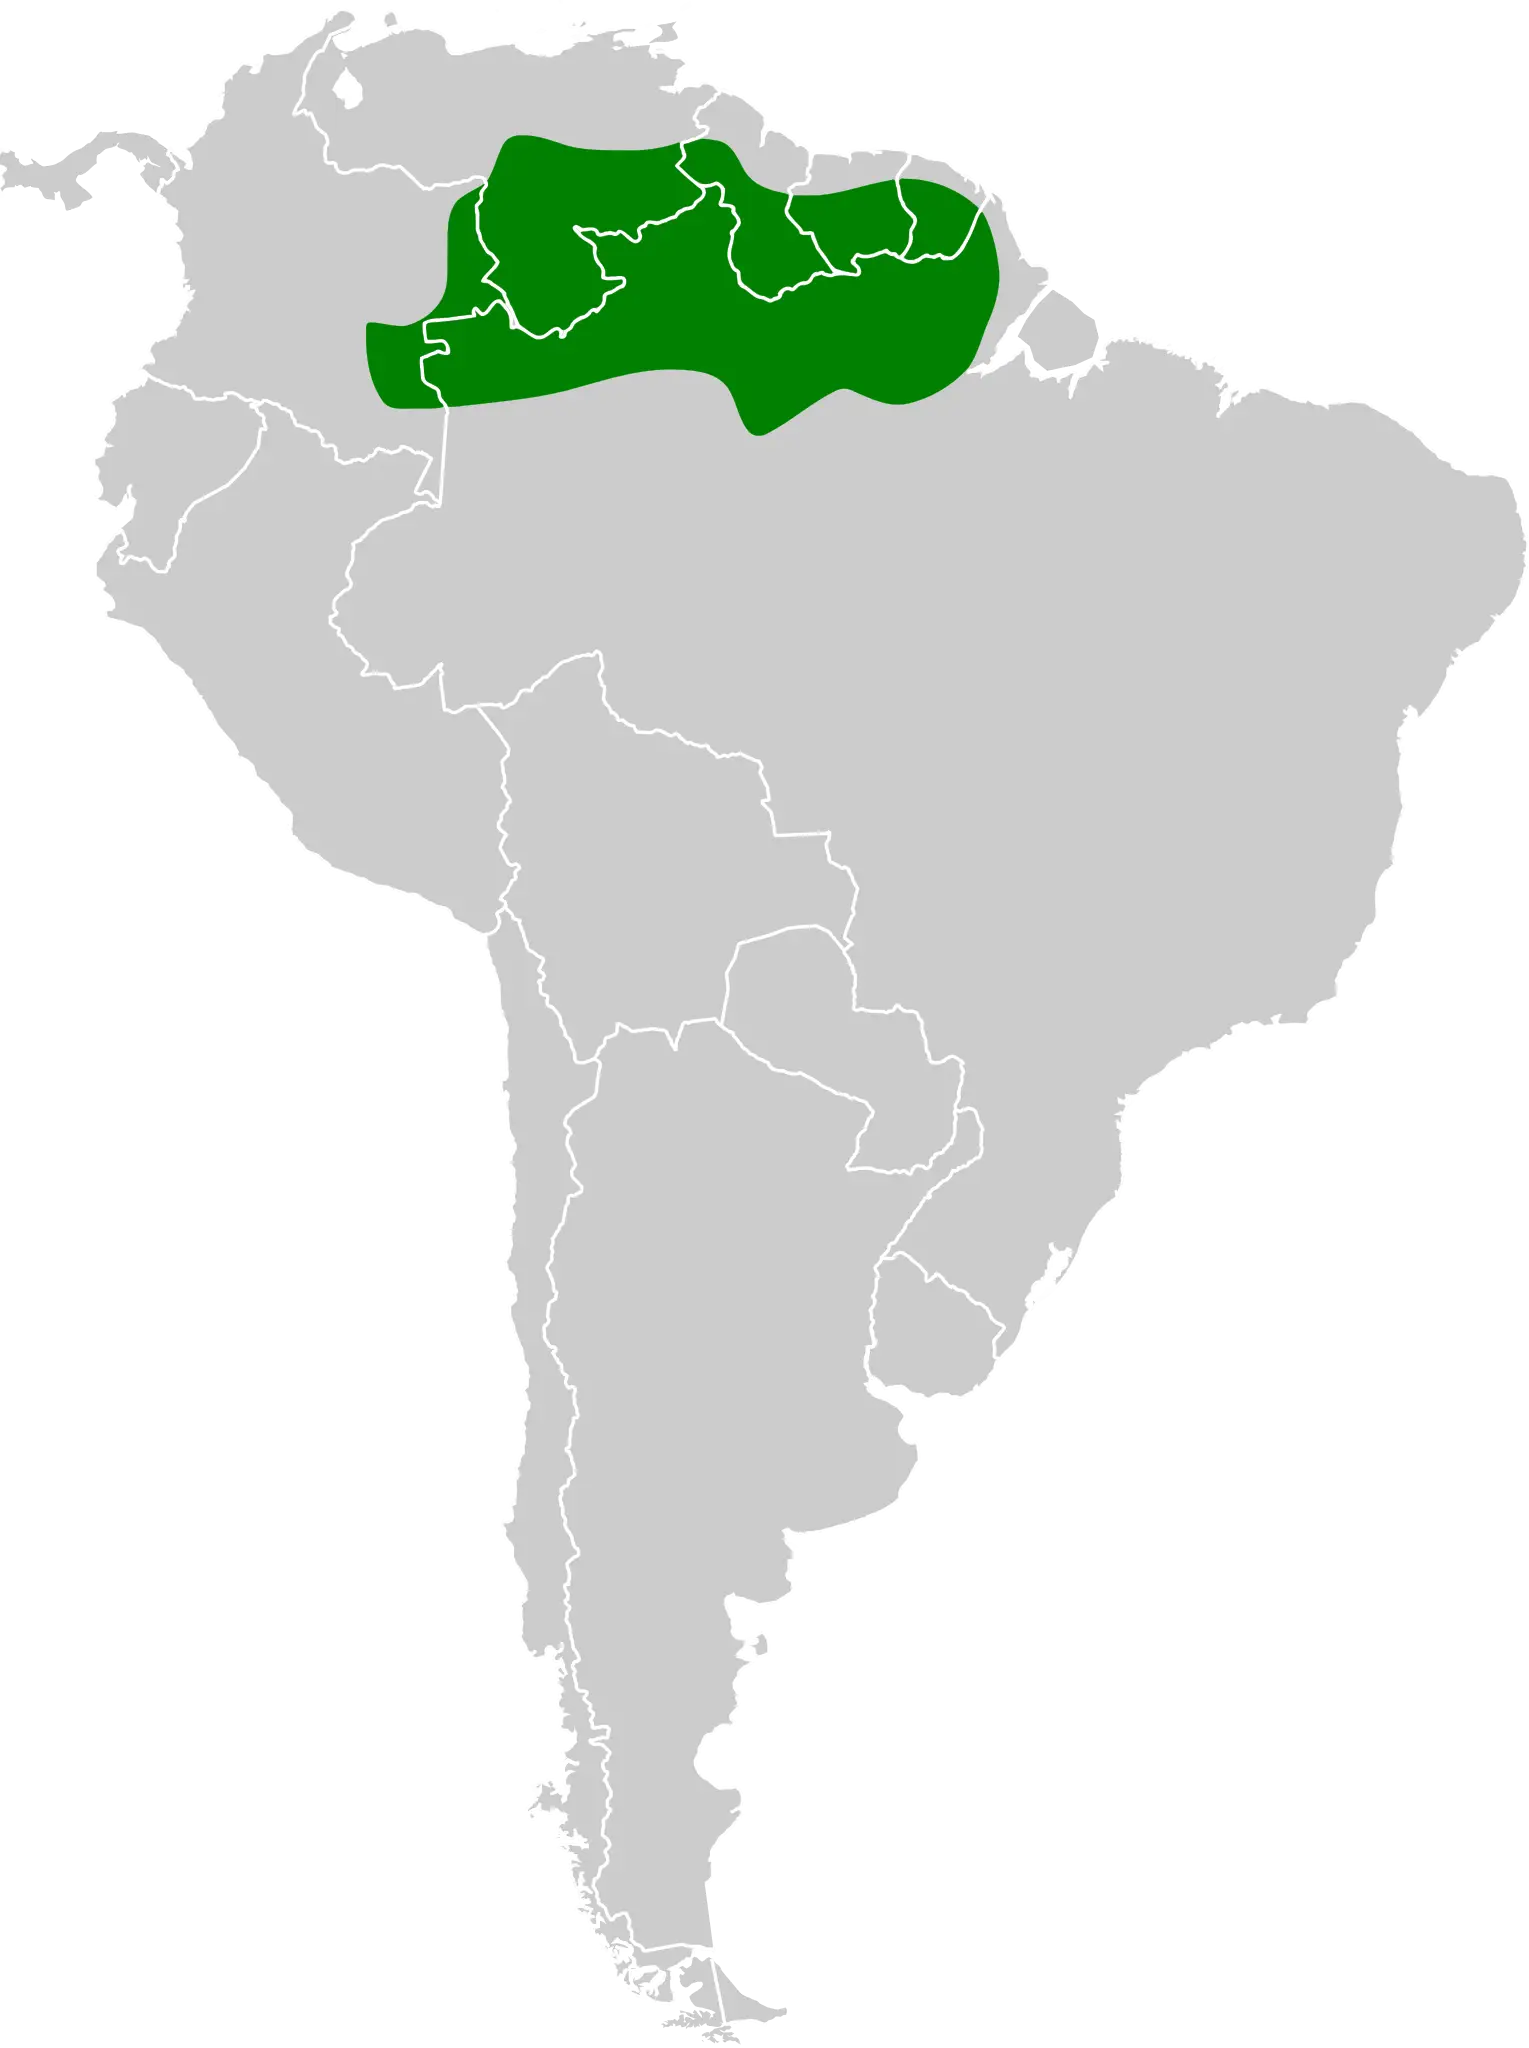 Guianan cock-of-the-rock habitat map